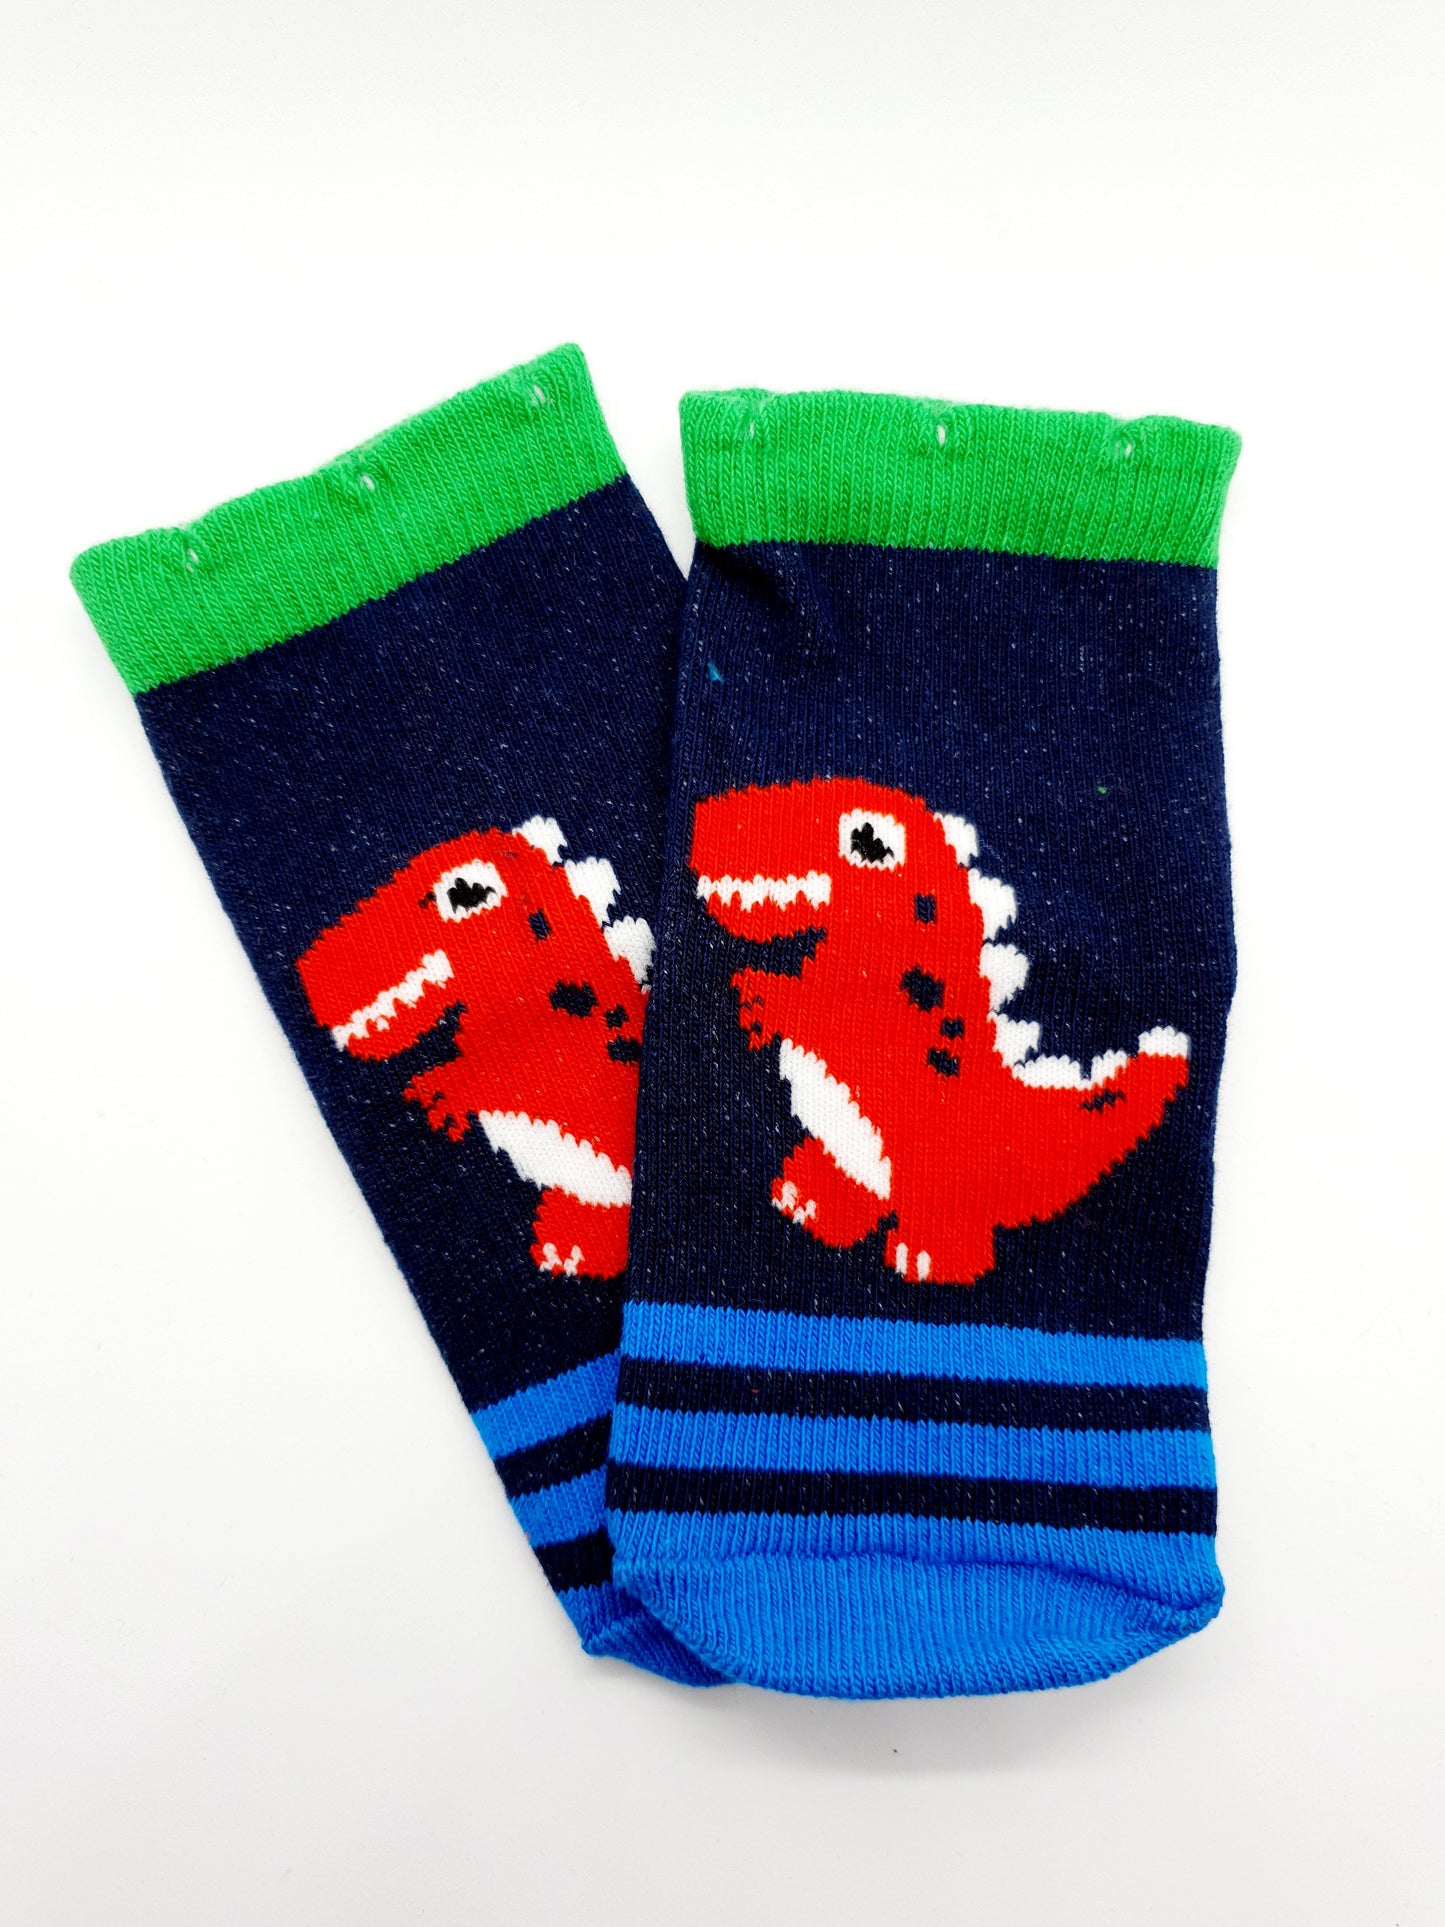 Toddler socks – D is for Dinosaur size 1-2 years